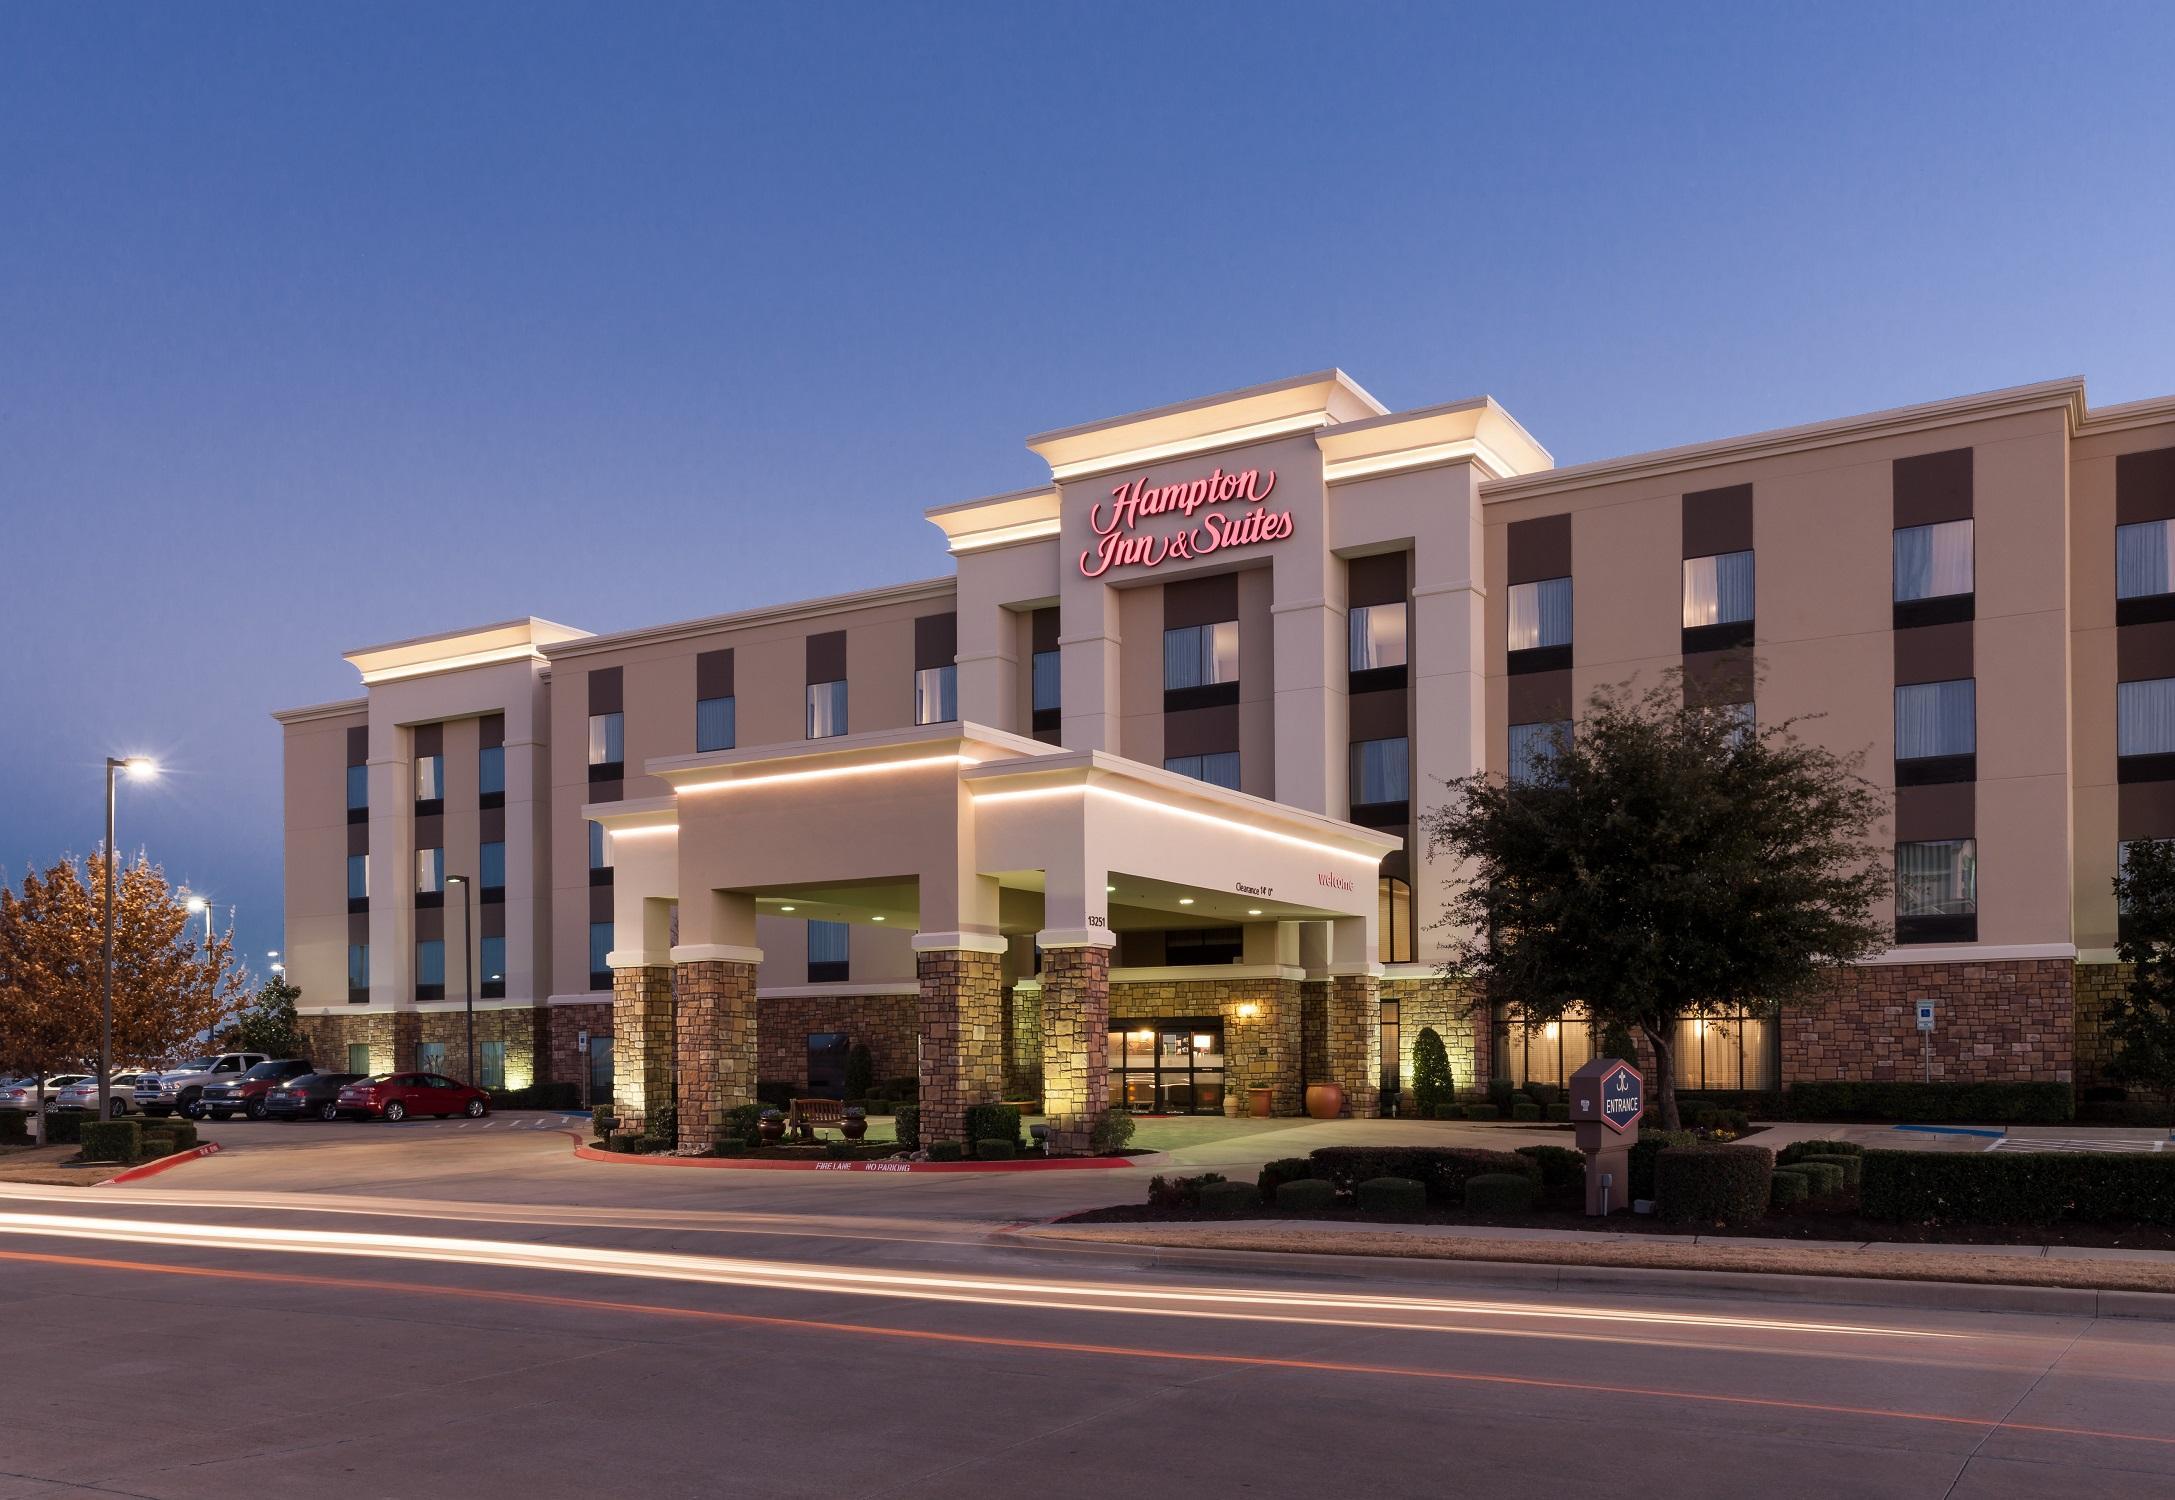 Photo of Hampton Inn & Suites Ft. Worth-Burleson, Burleson, TX